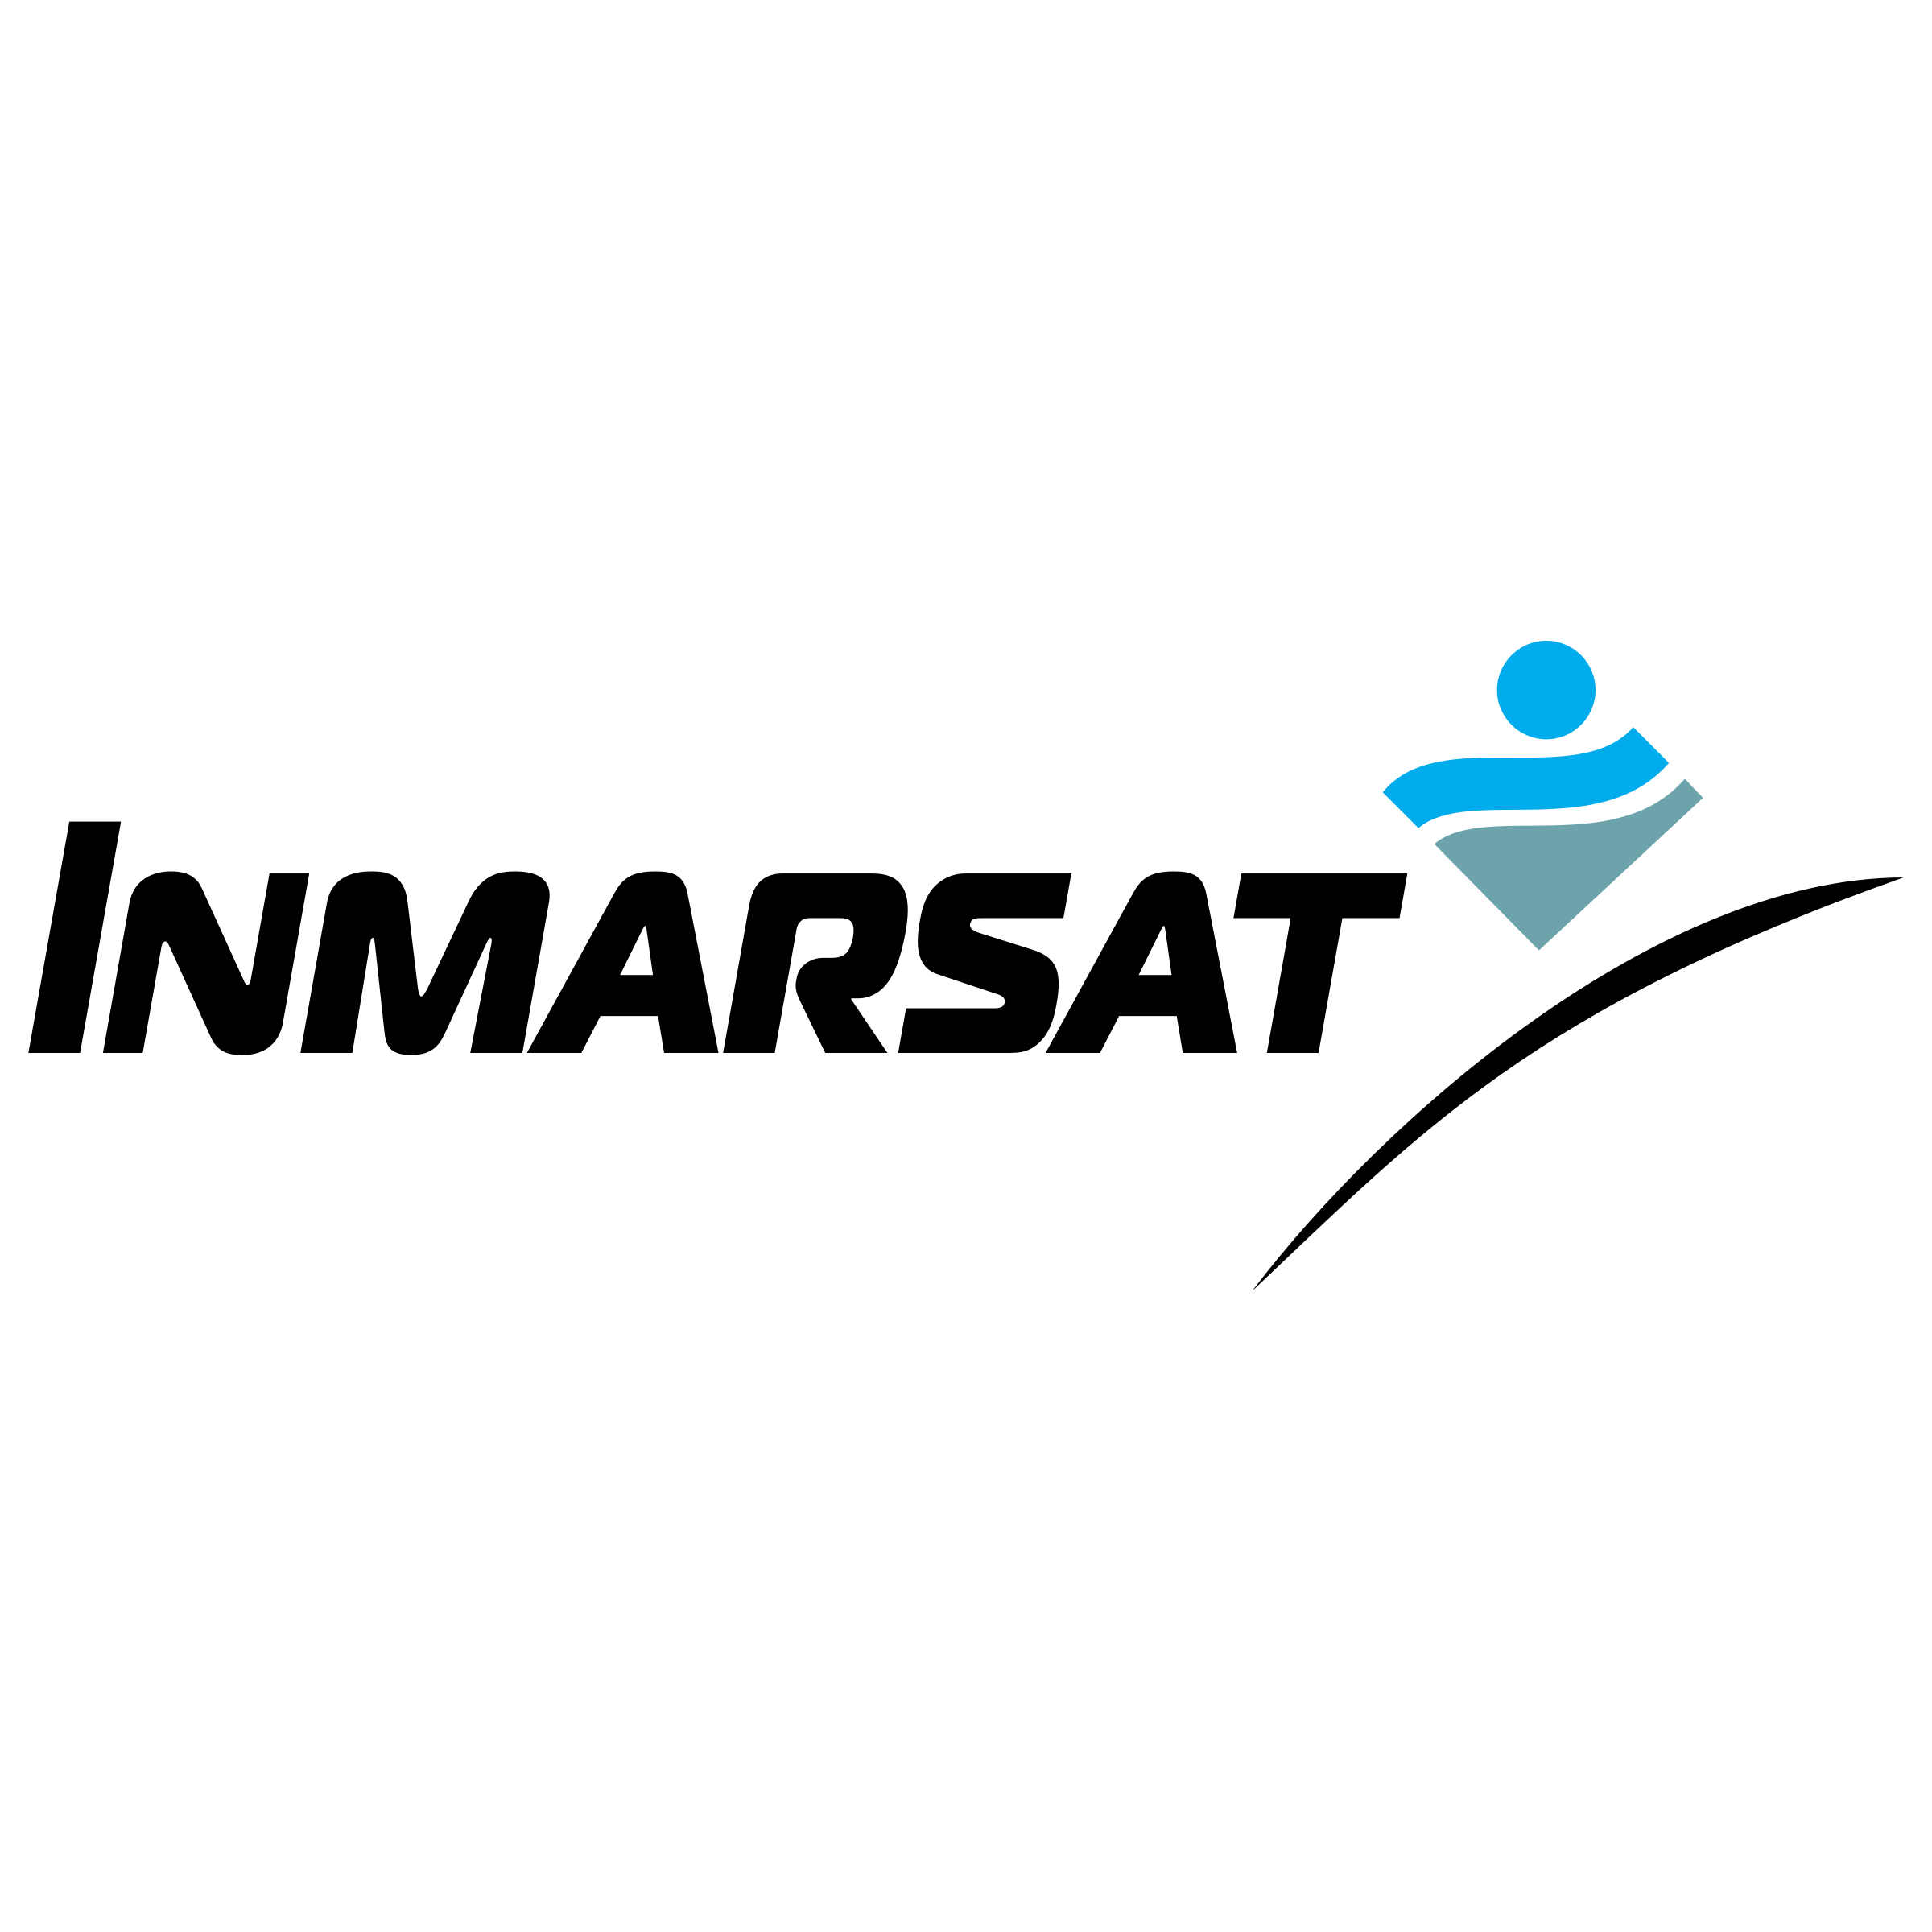 Inmarsat Logo - Inmarsat Logo PNG Transparent & SVG Vector - Freebie Supply